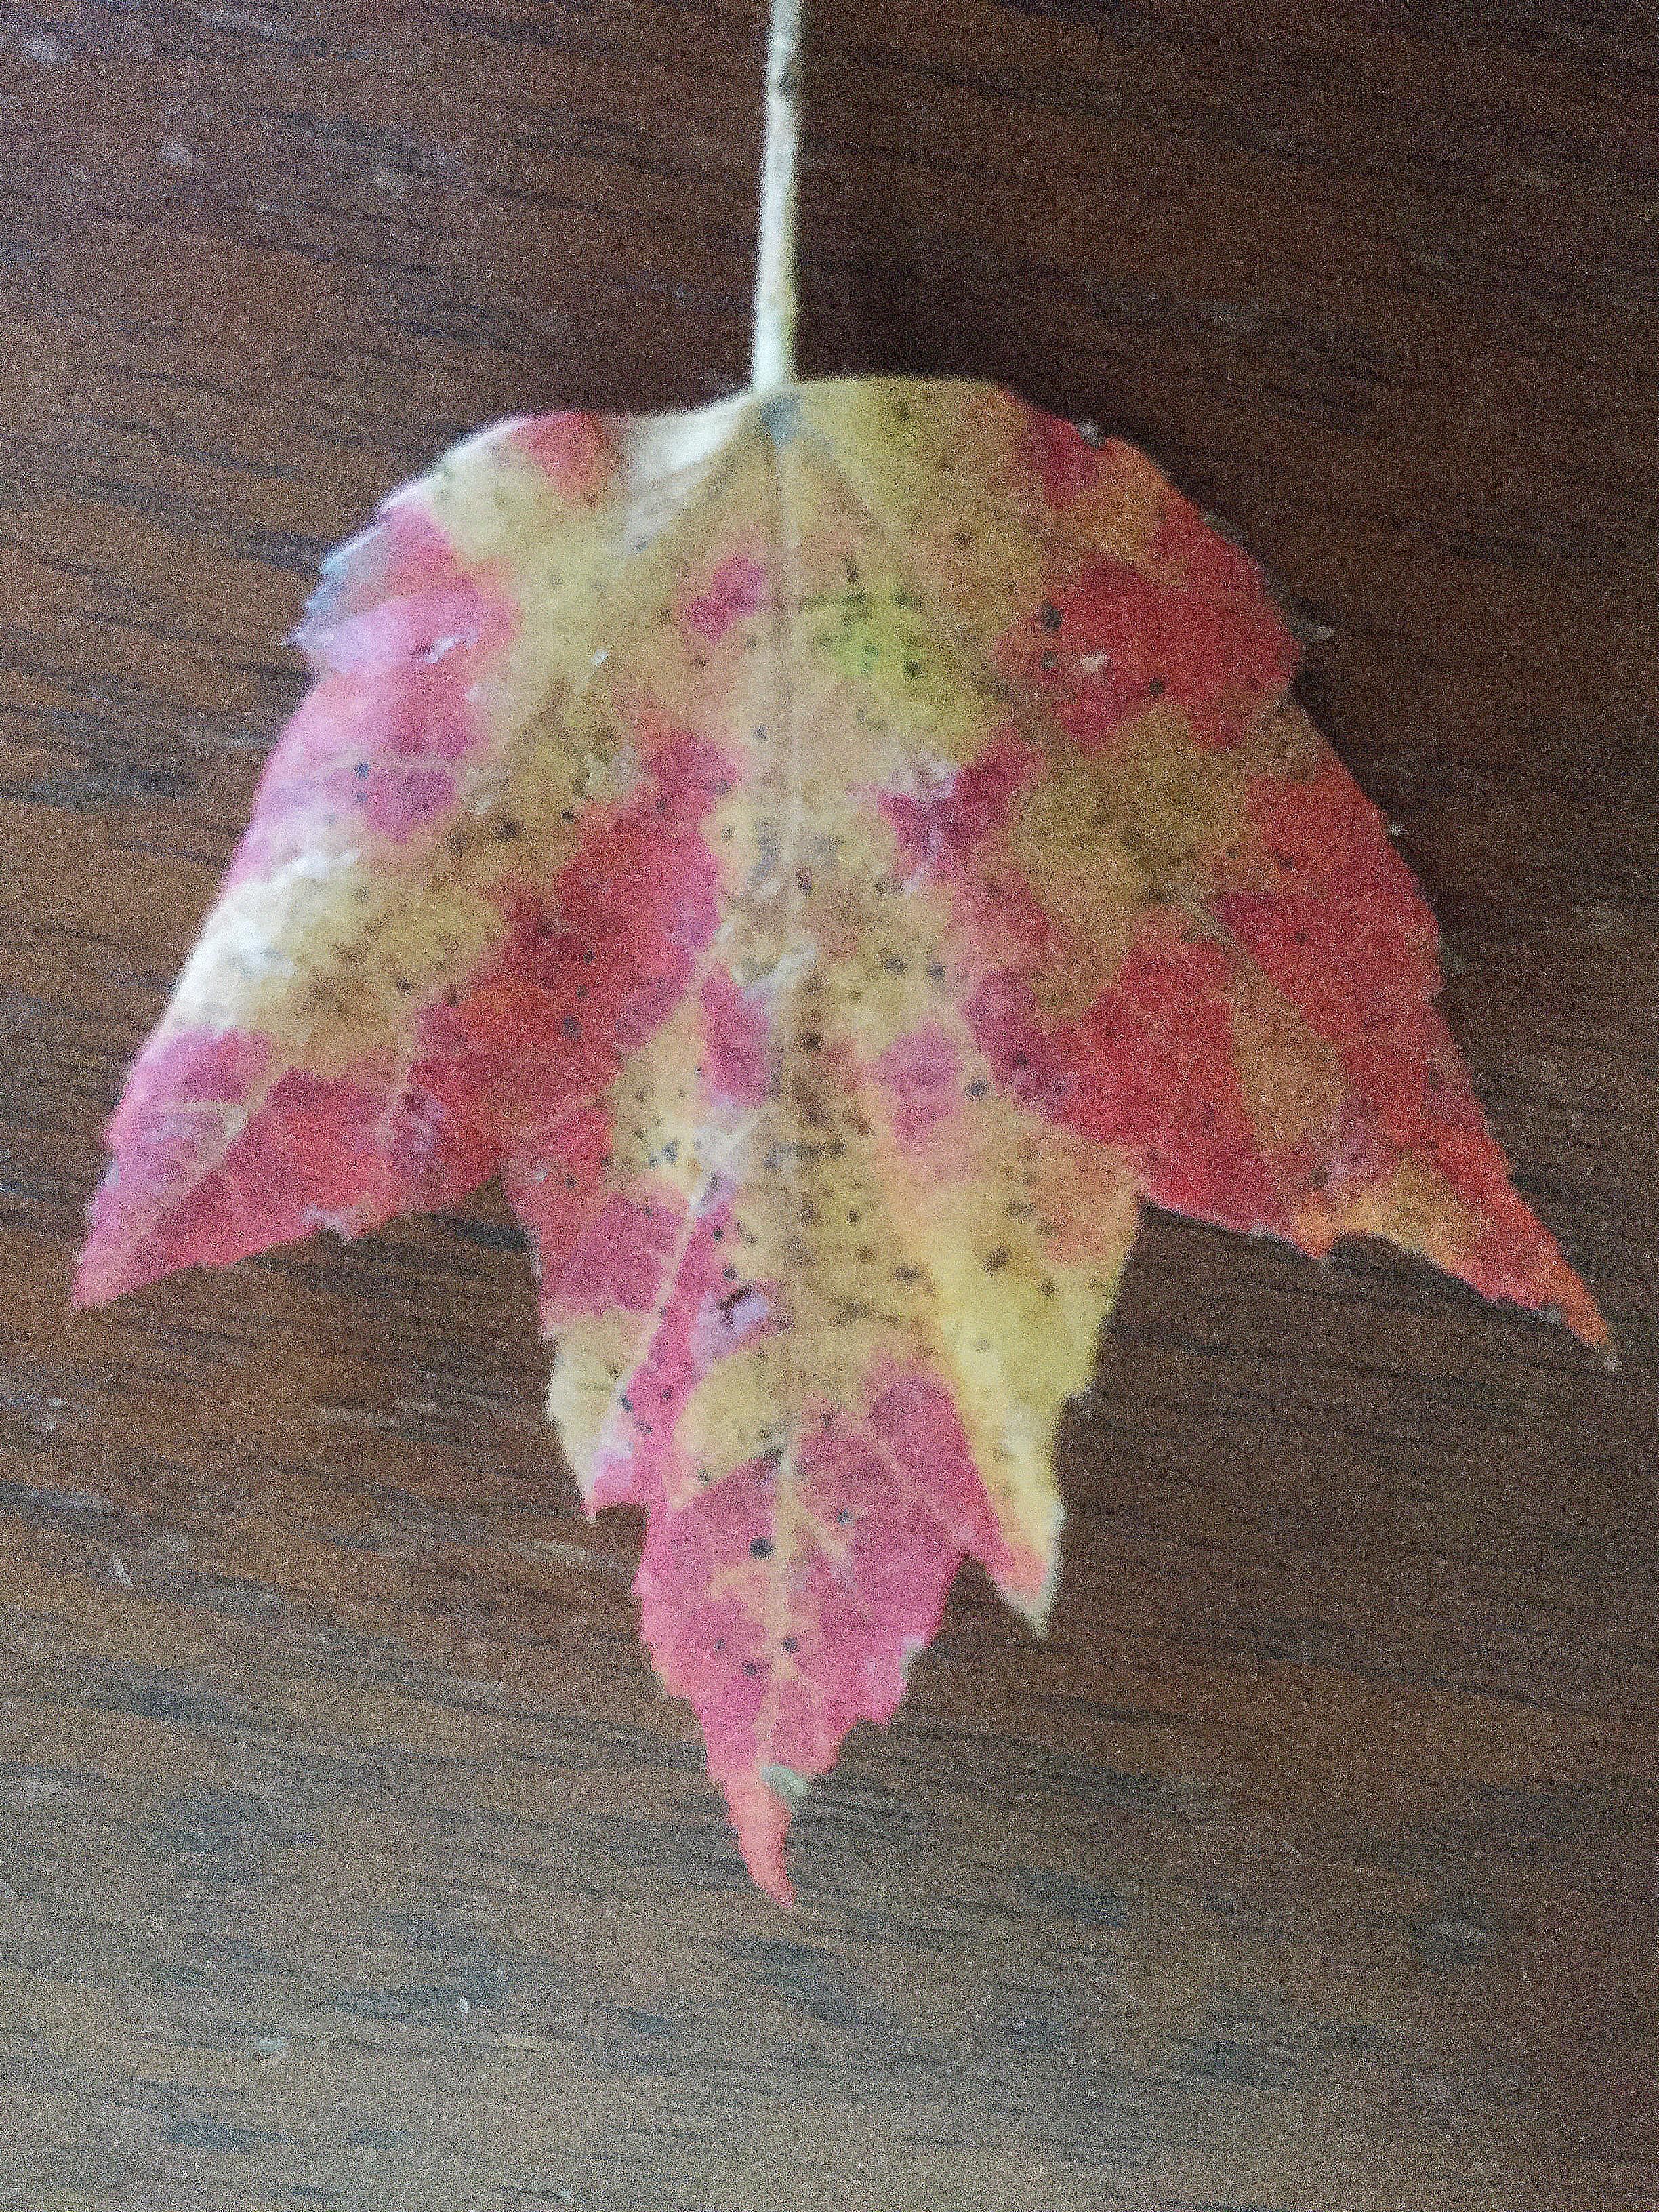 The Fallen Leaves - Rachel Carson Council